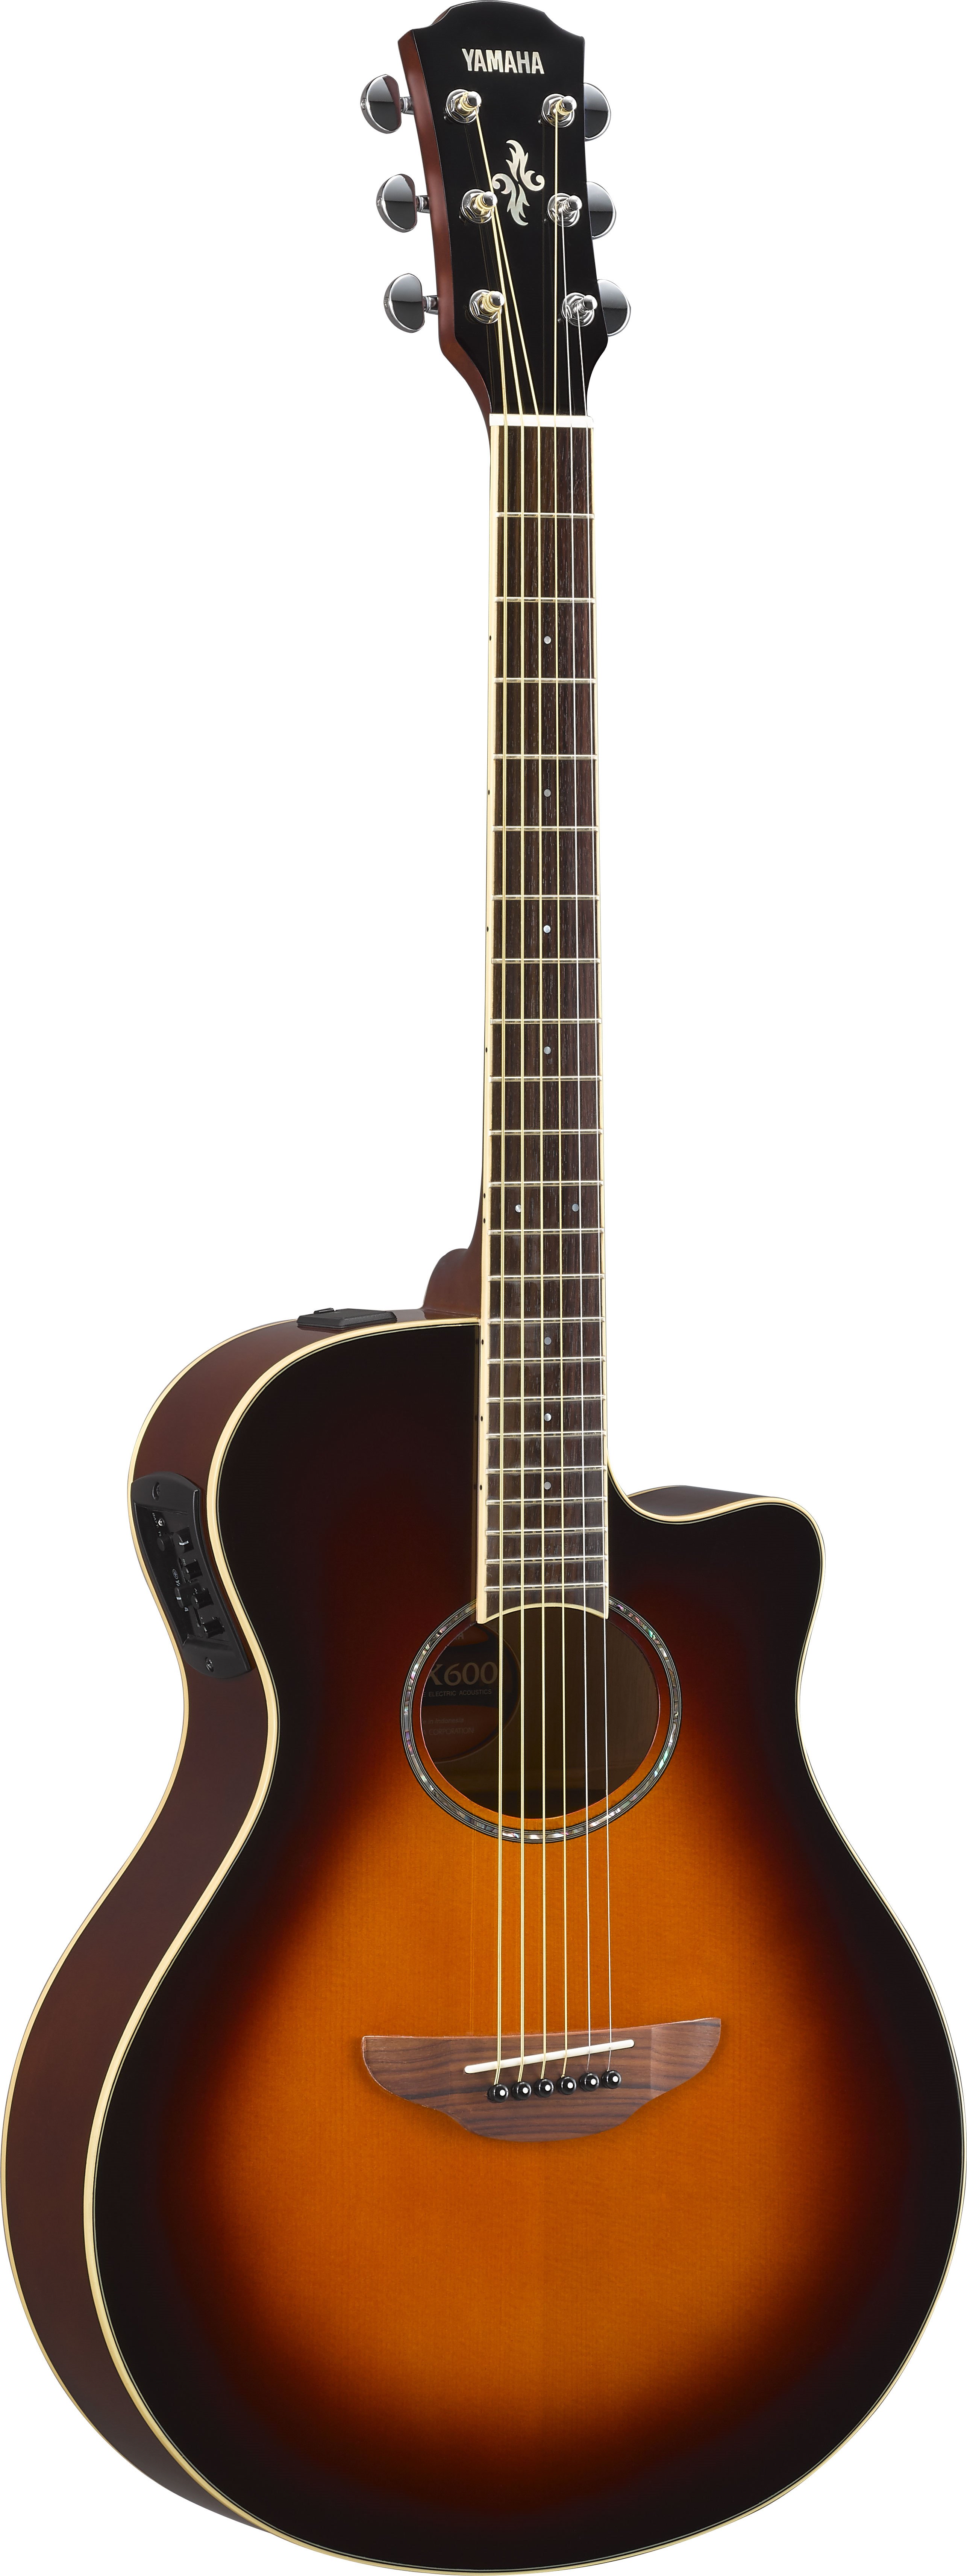 Yamaha Apx600 - Old Violin Sunburst - Electro acoustic guitar - Variation 1